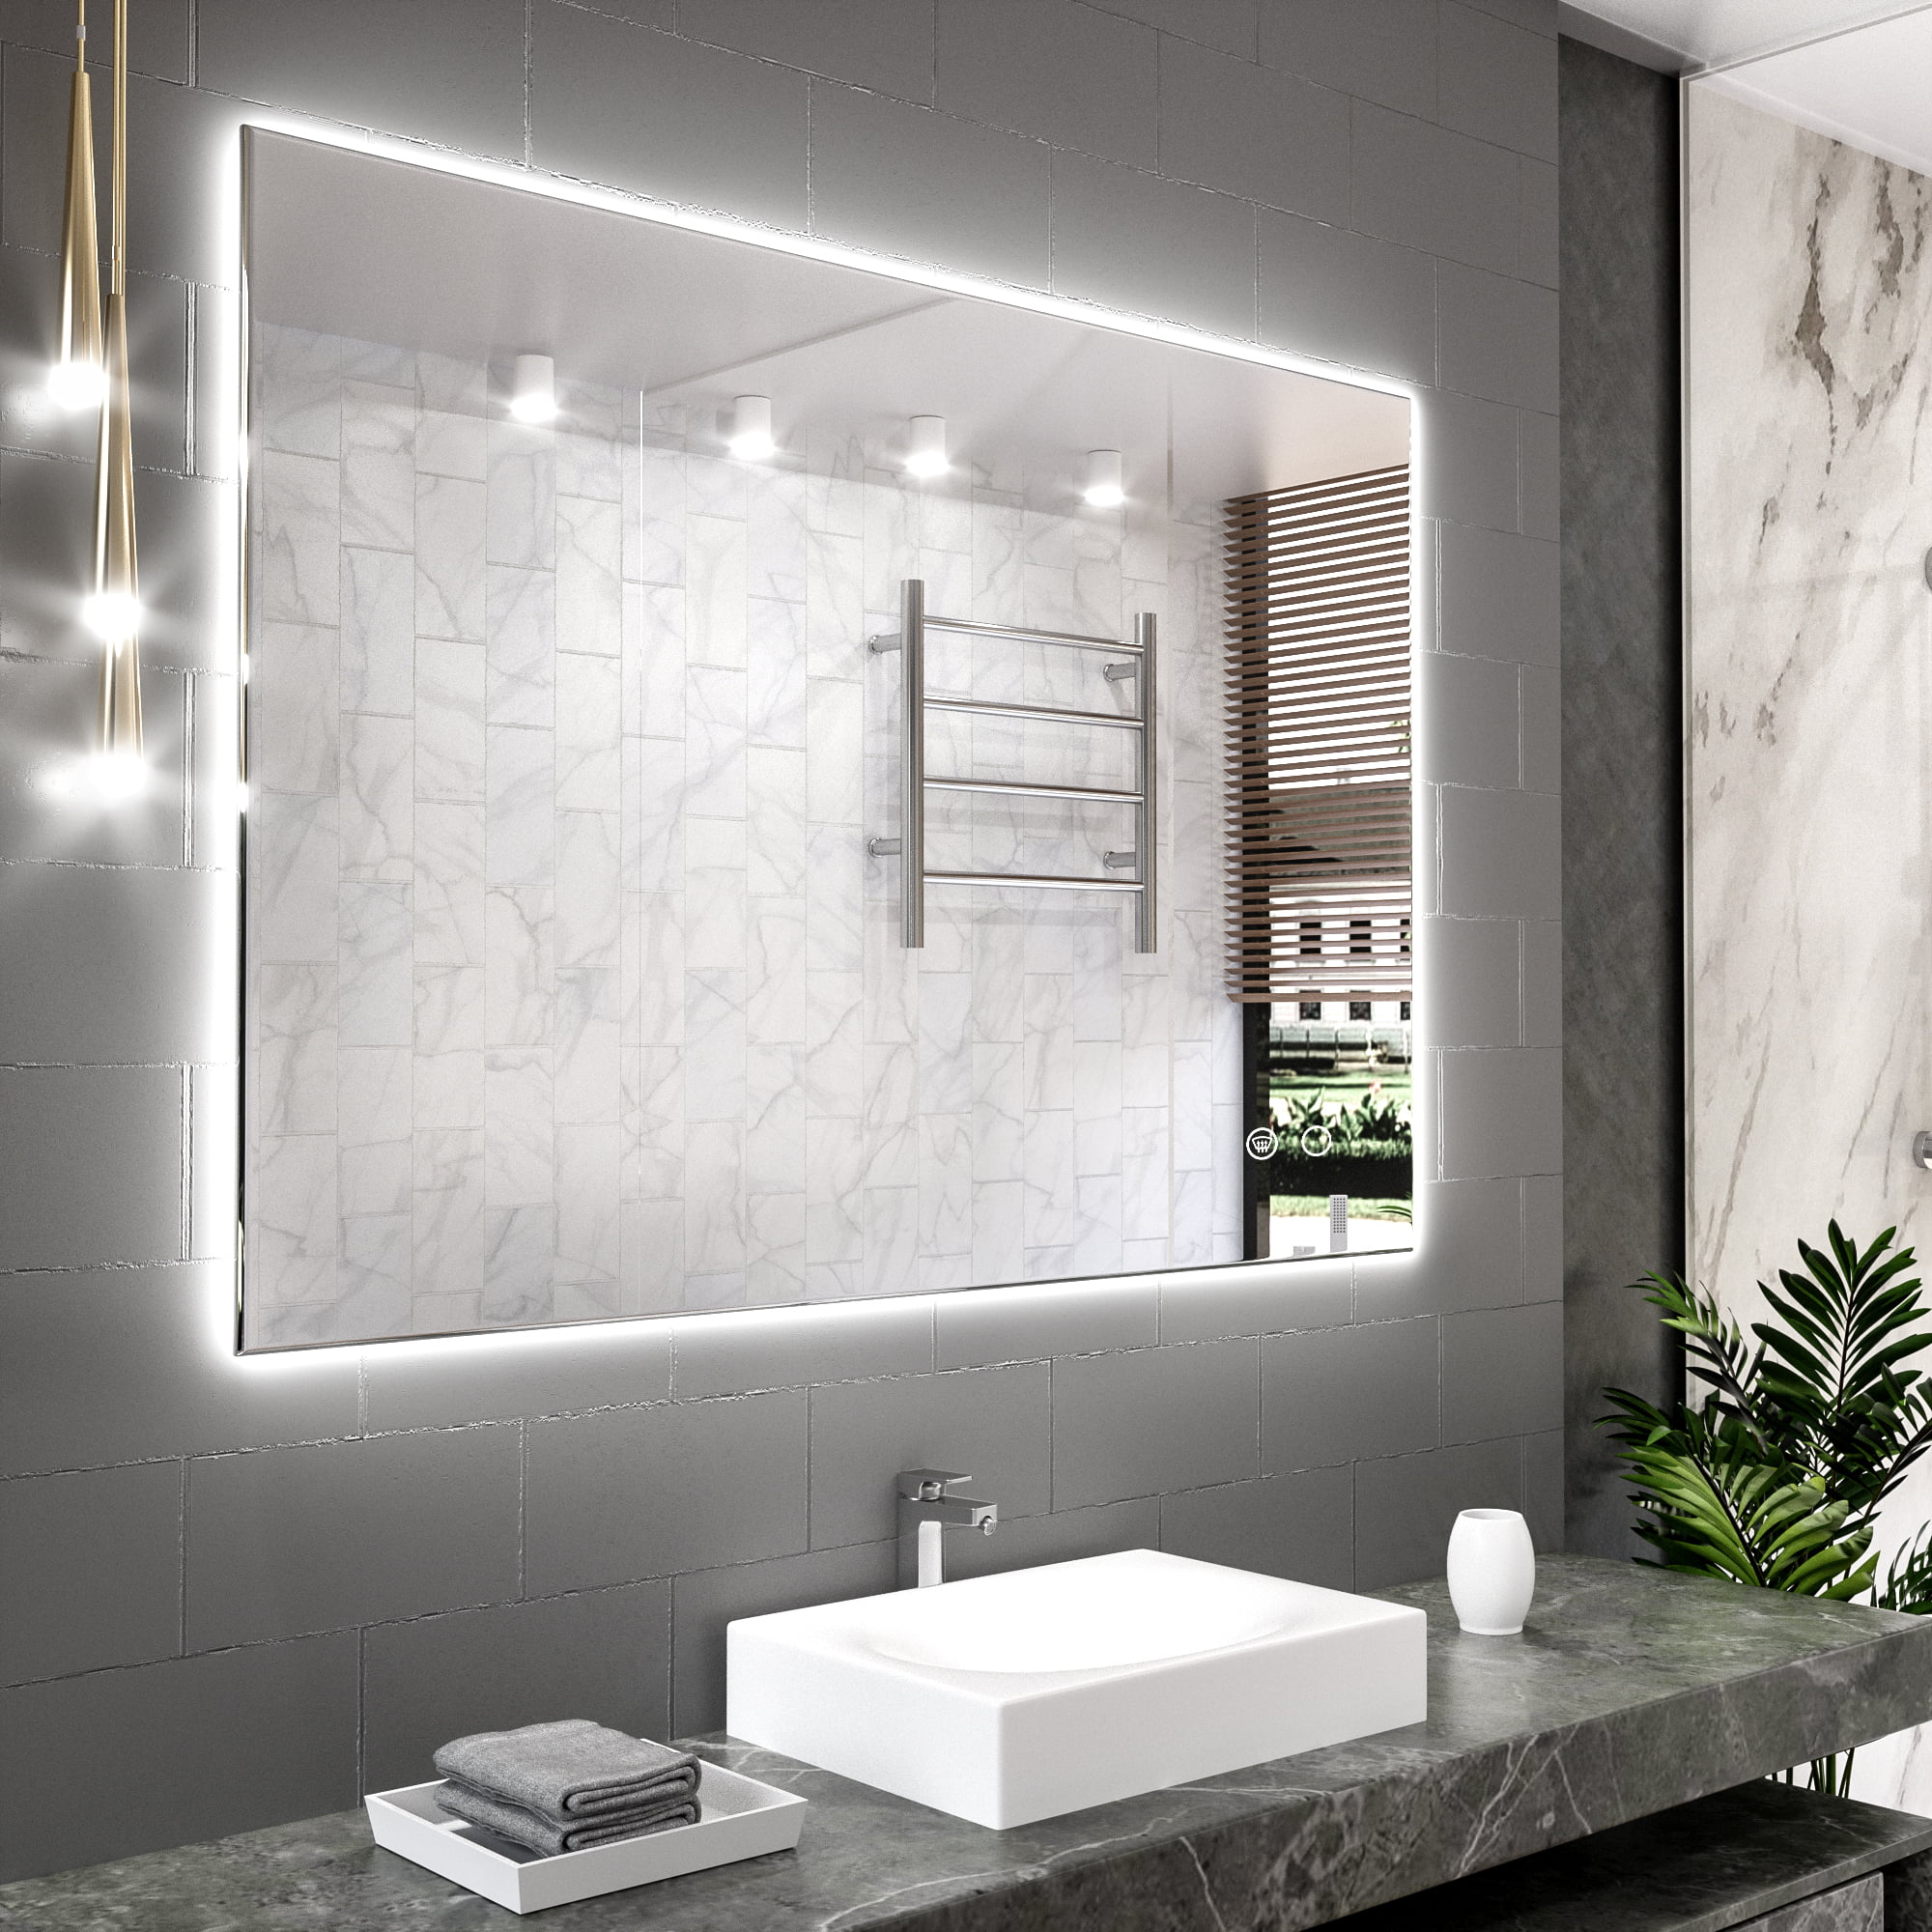 Keonjinn 24 x 32 Inch LED Backlit Mirror Bathroom Mirror with Lights Wall Mounted Lighted Bathroom Vanity Mirror Anti-Fog Dimmable Makeup Mirror Horizontal/Vertical